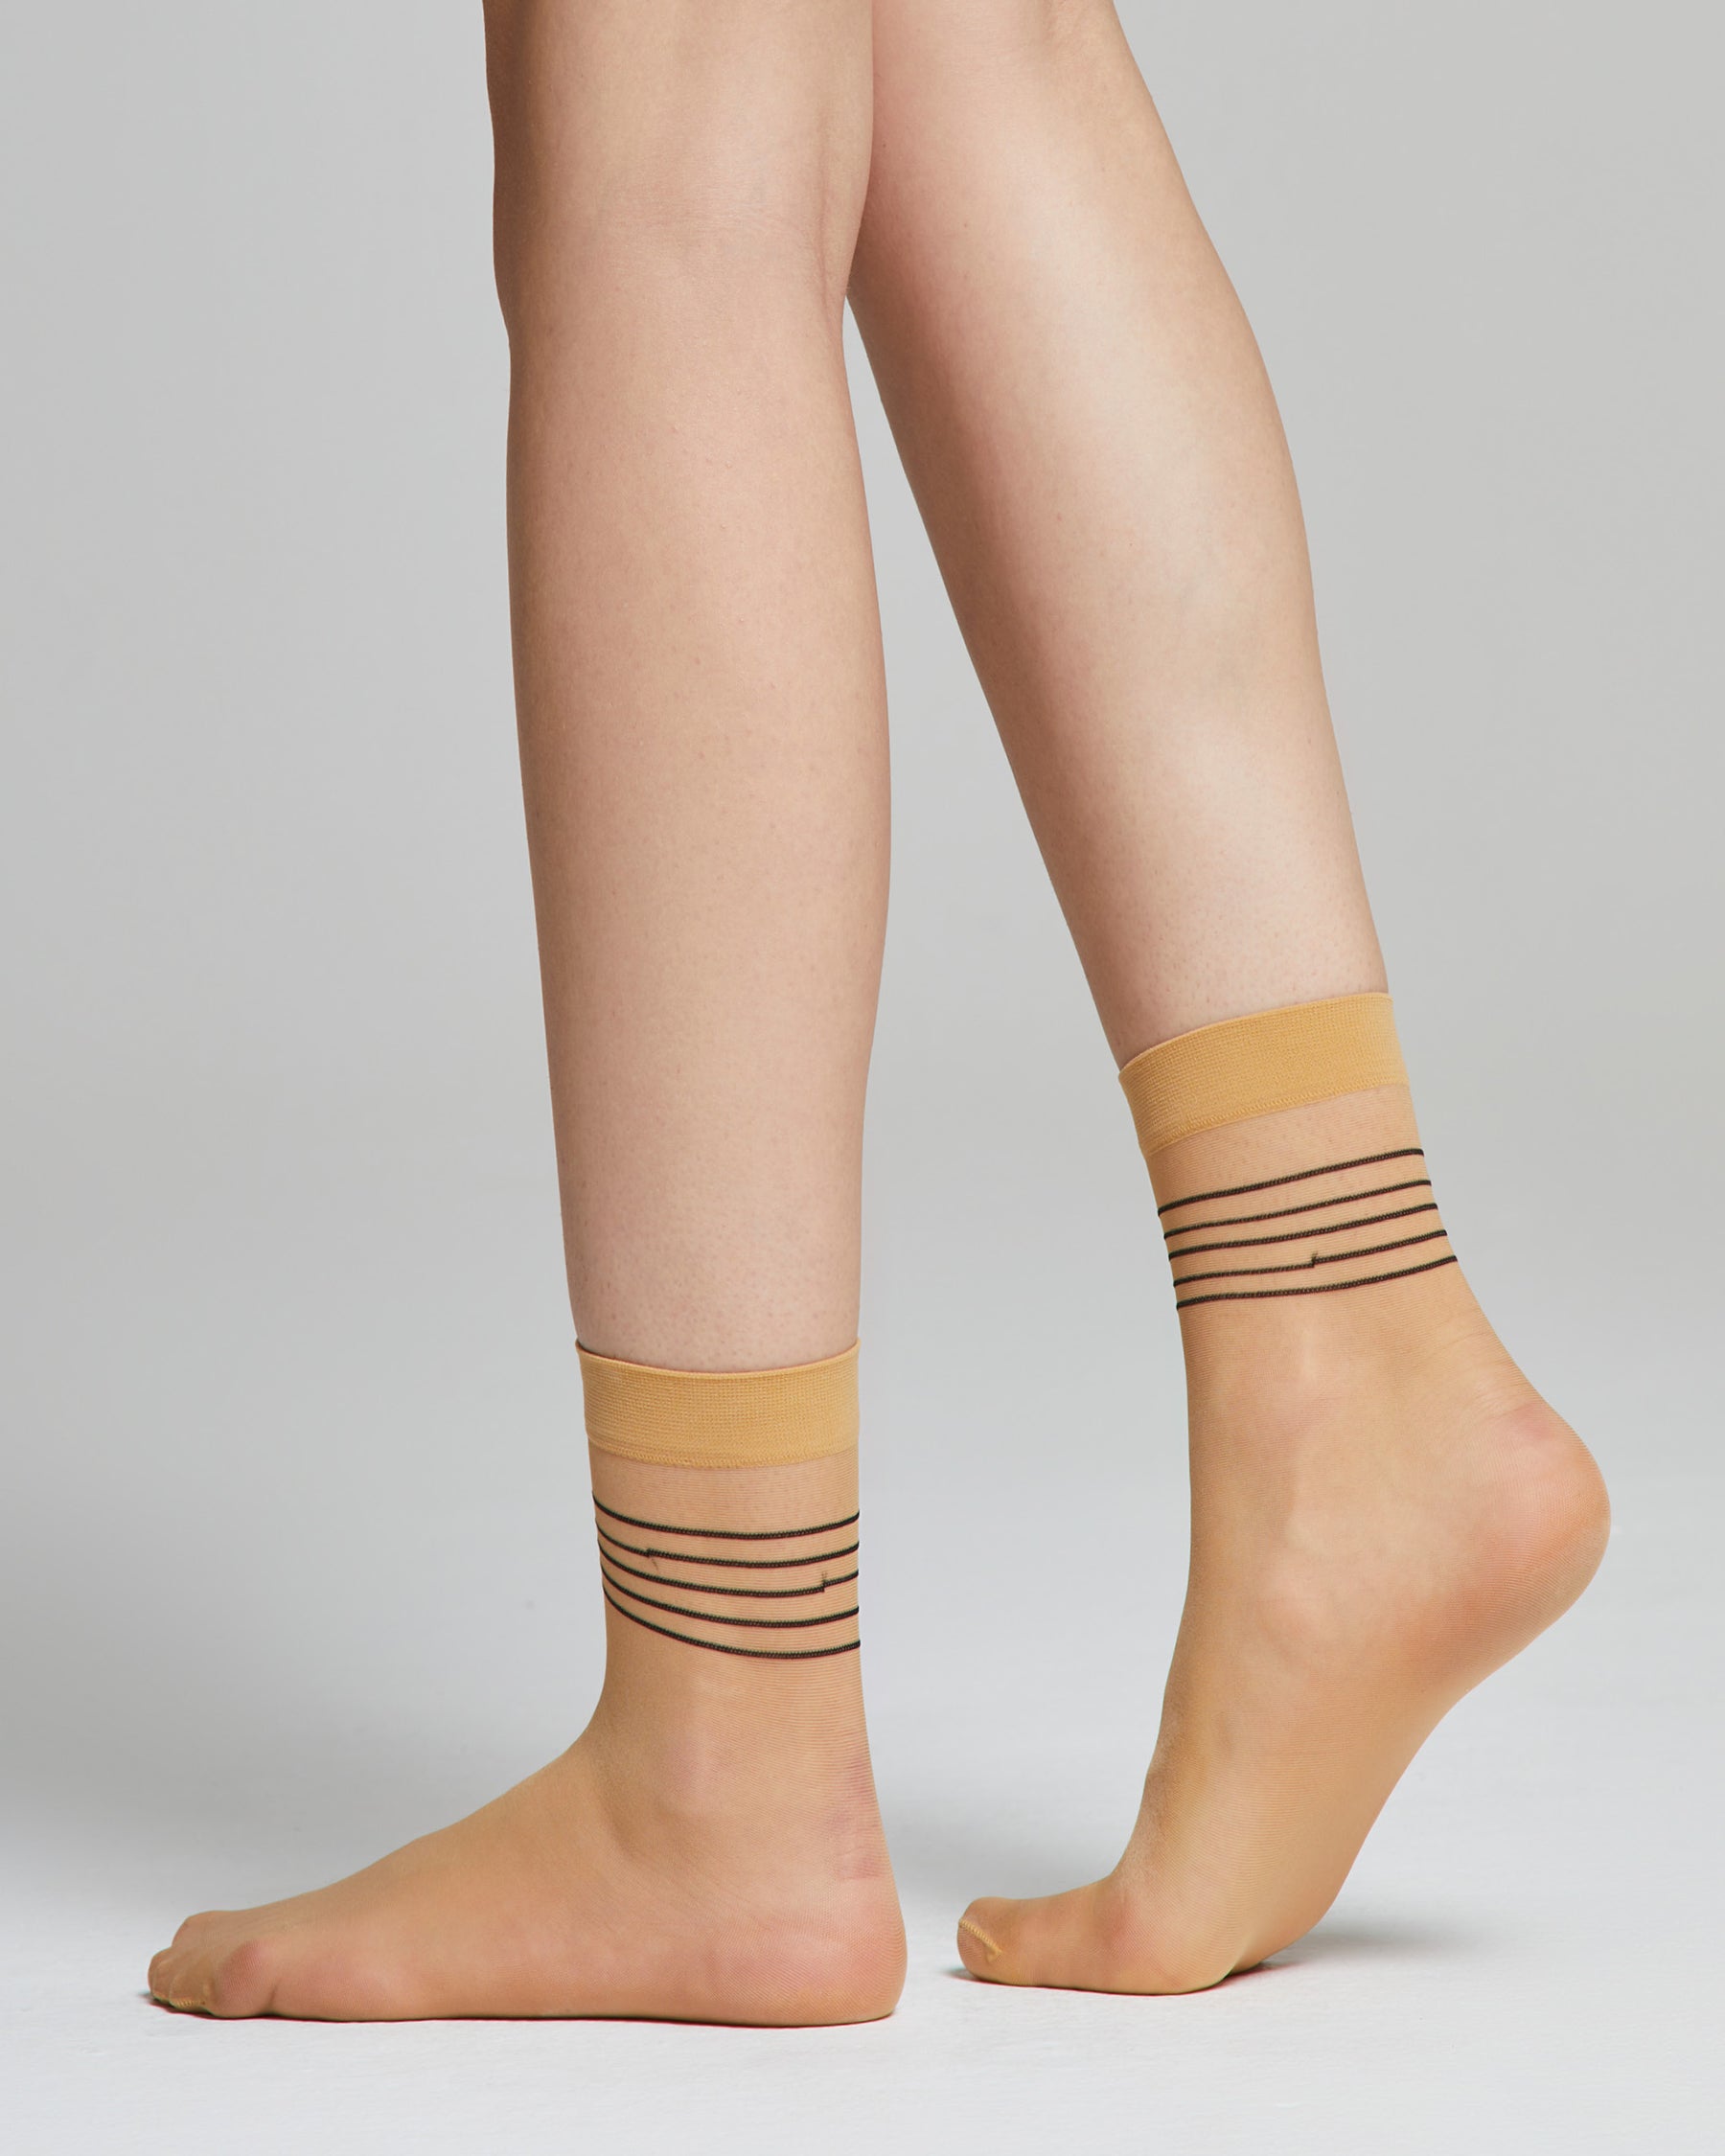 Glicine sheer socks with contrasting stripes